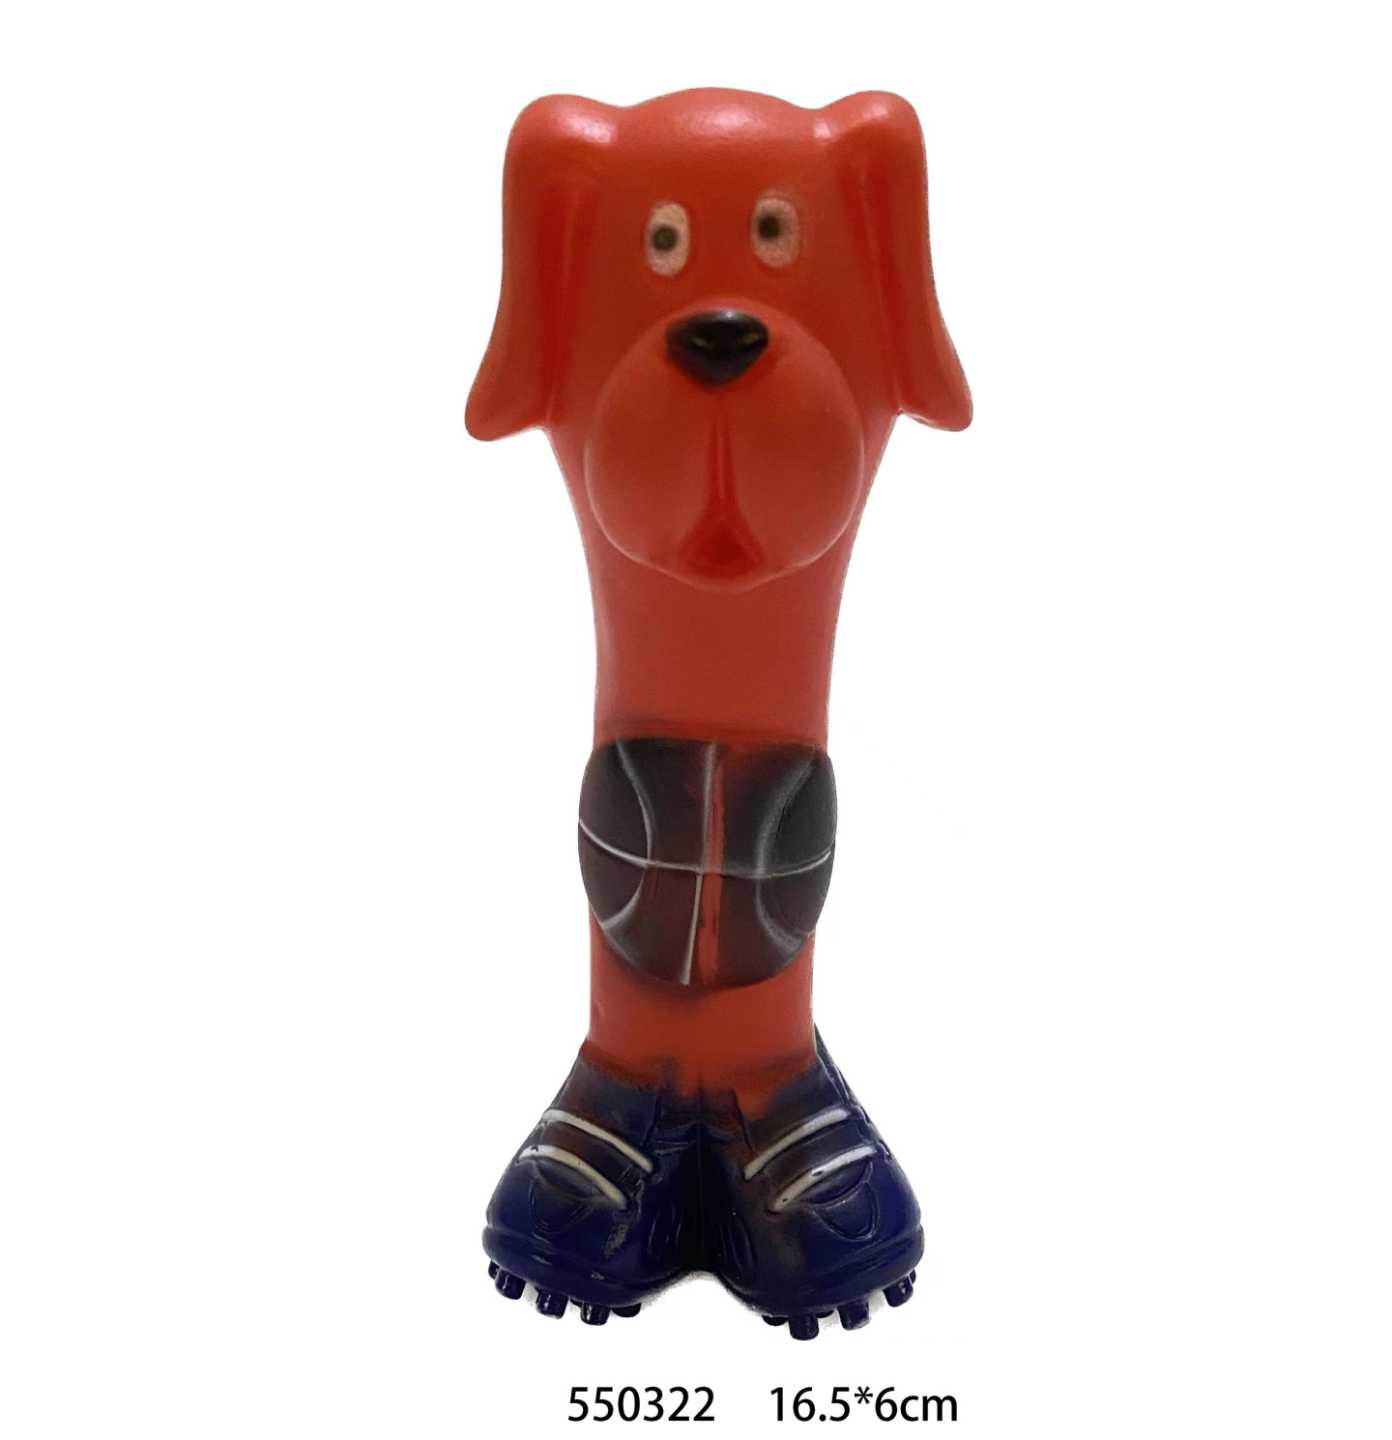 Toy dog ​​animal plastic - 16.5x6cm - 550322